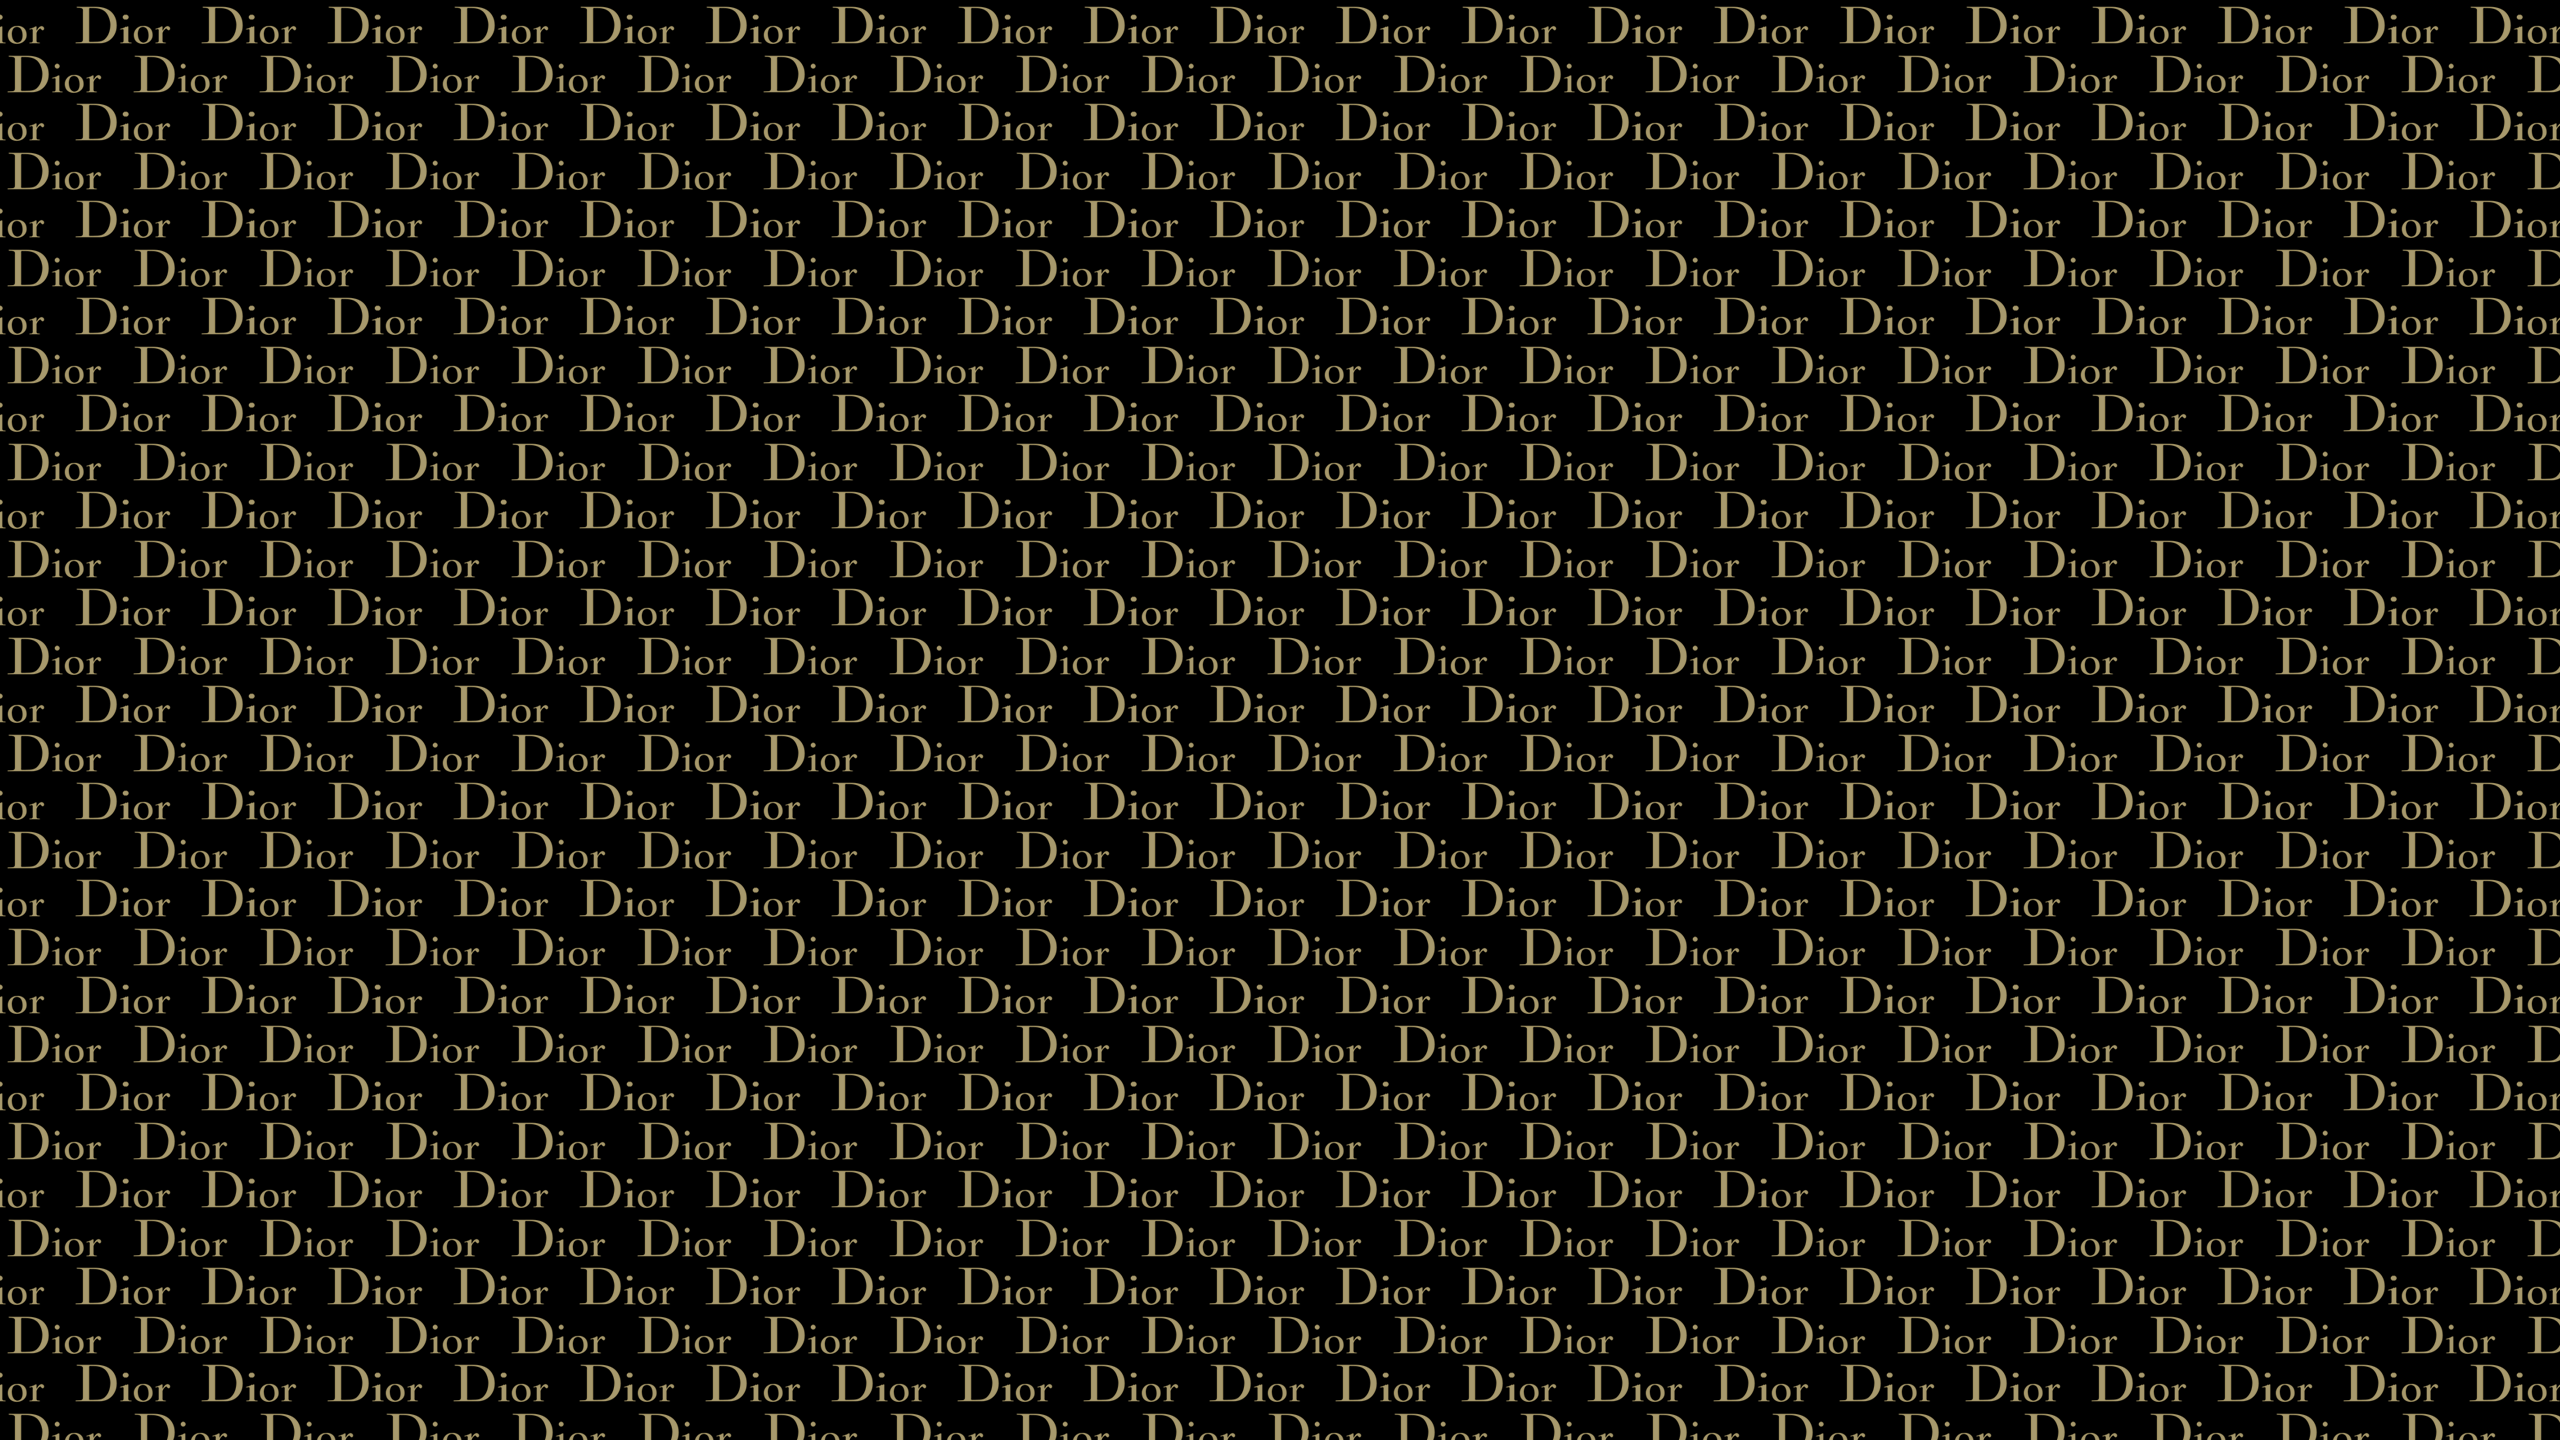 Christian Dior Logo Wallpapers.